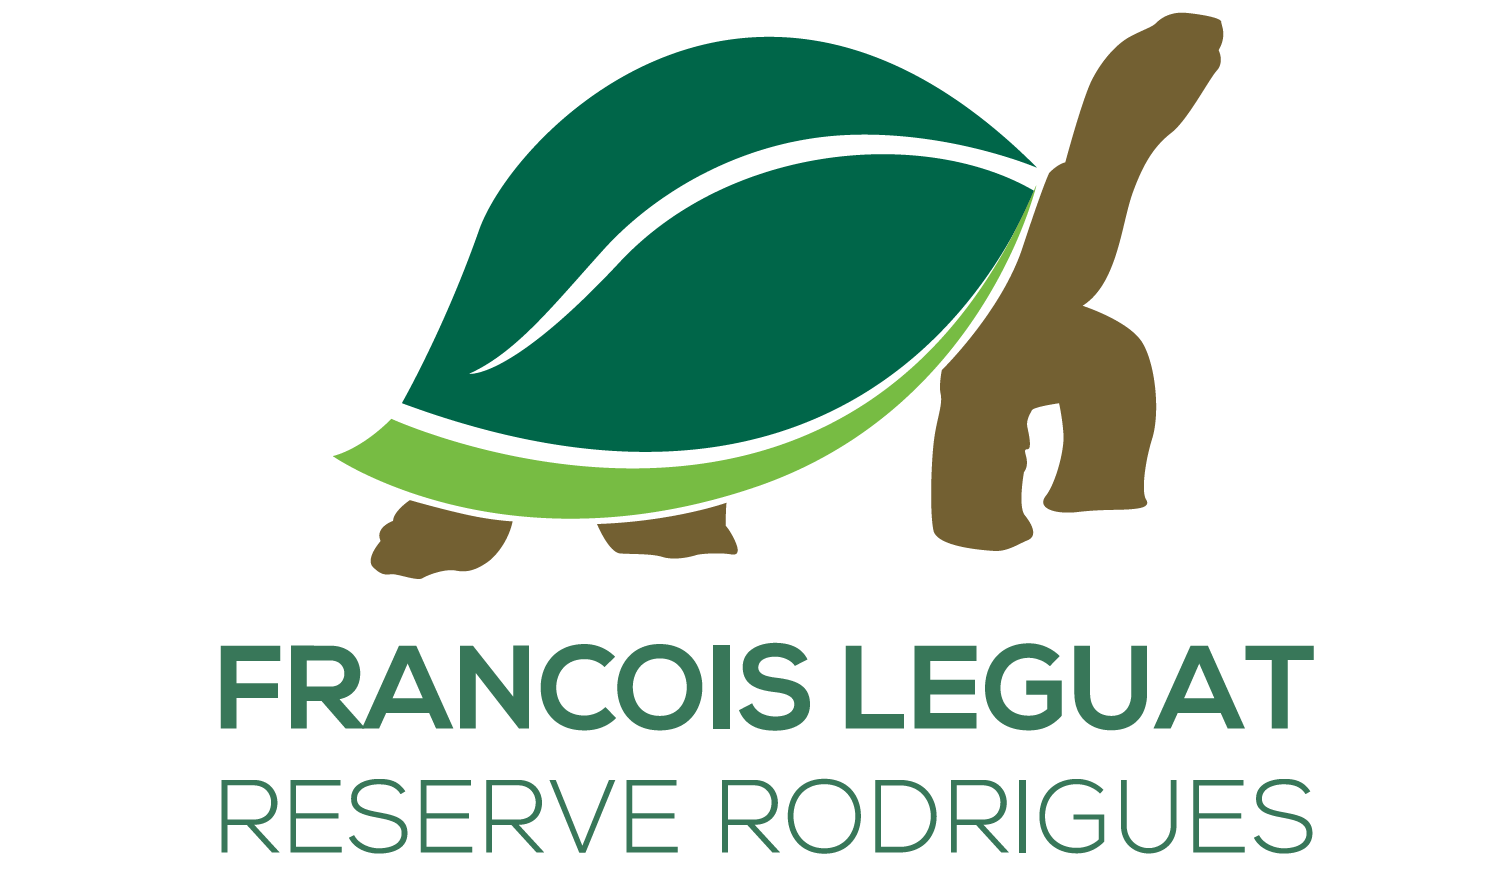 Francois Leguat Reserve